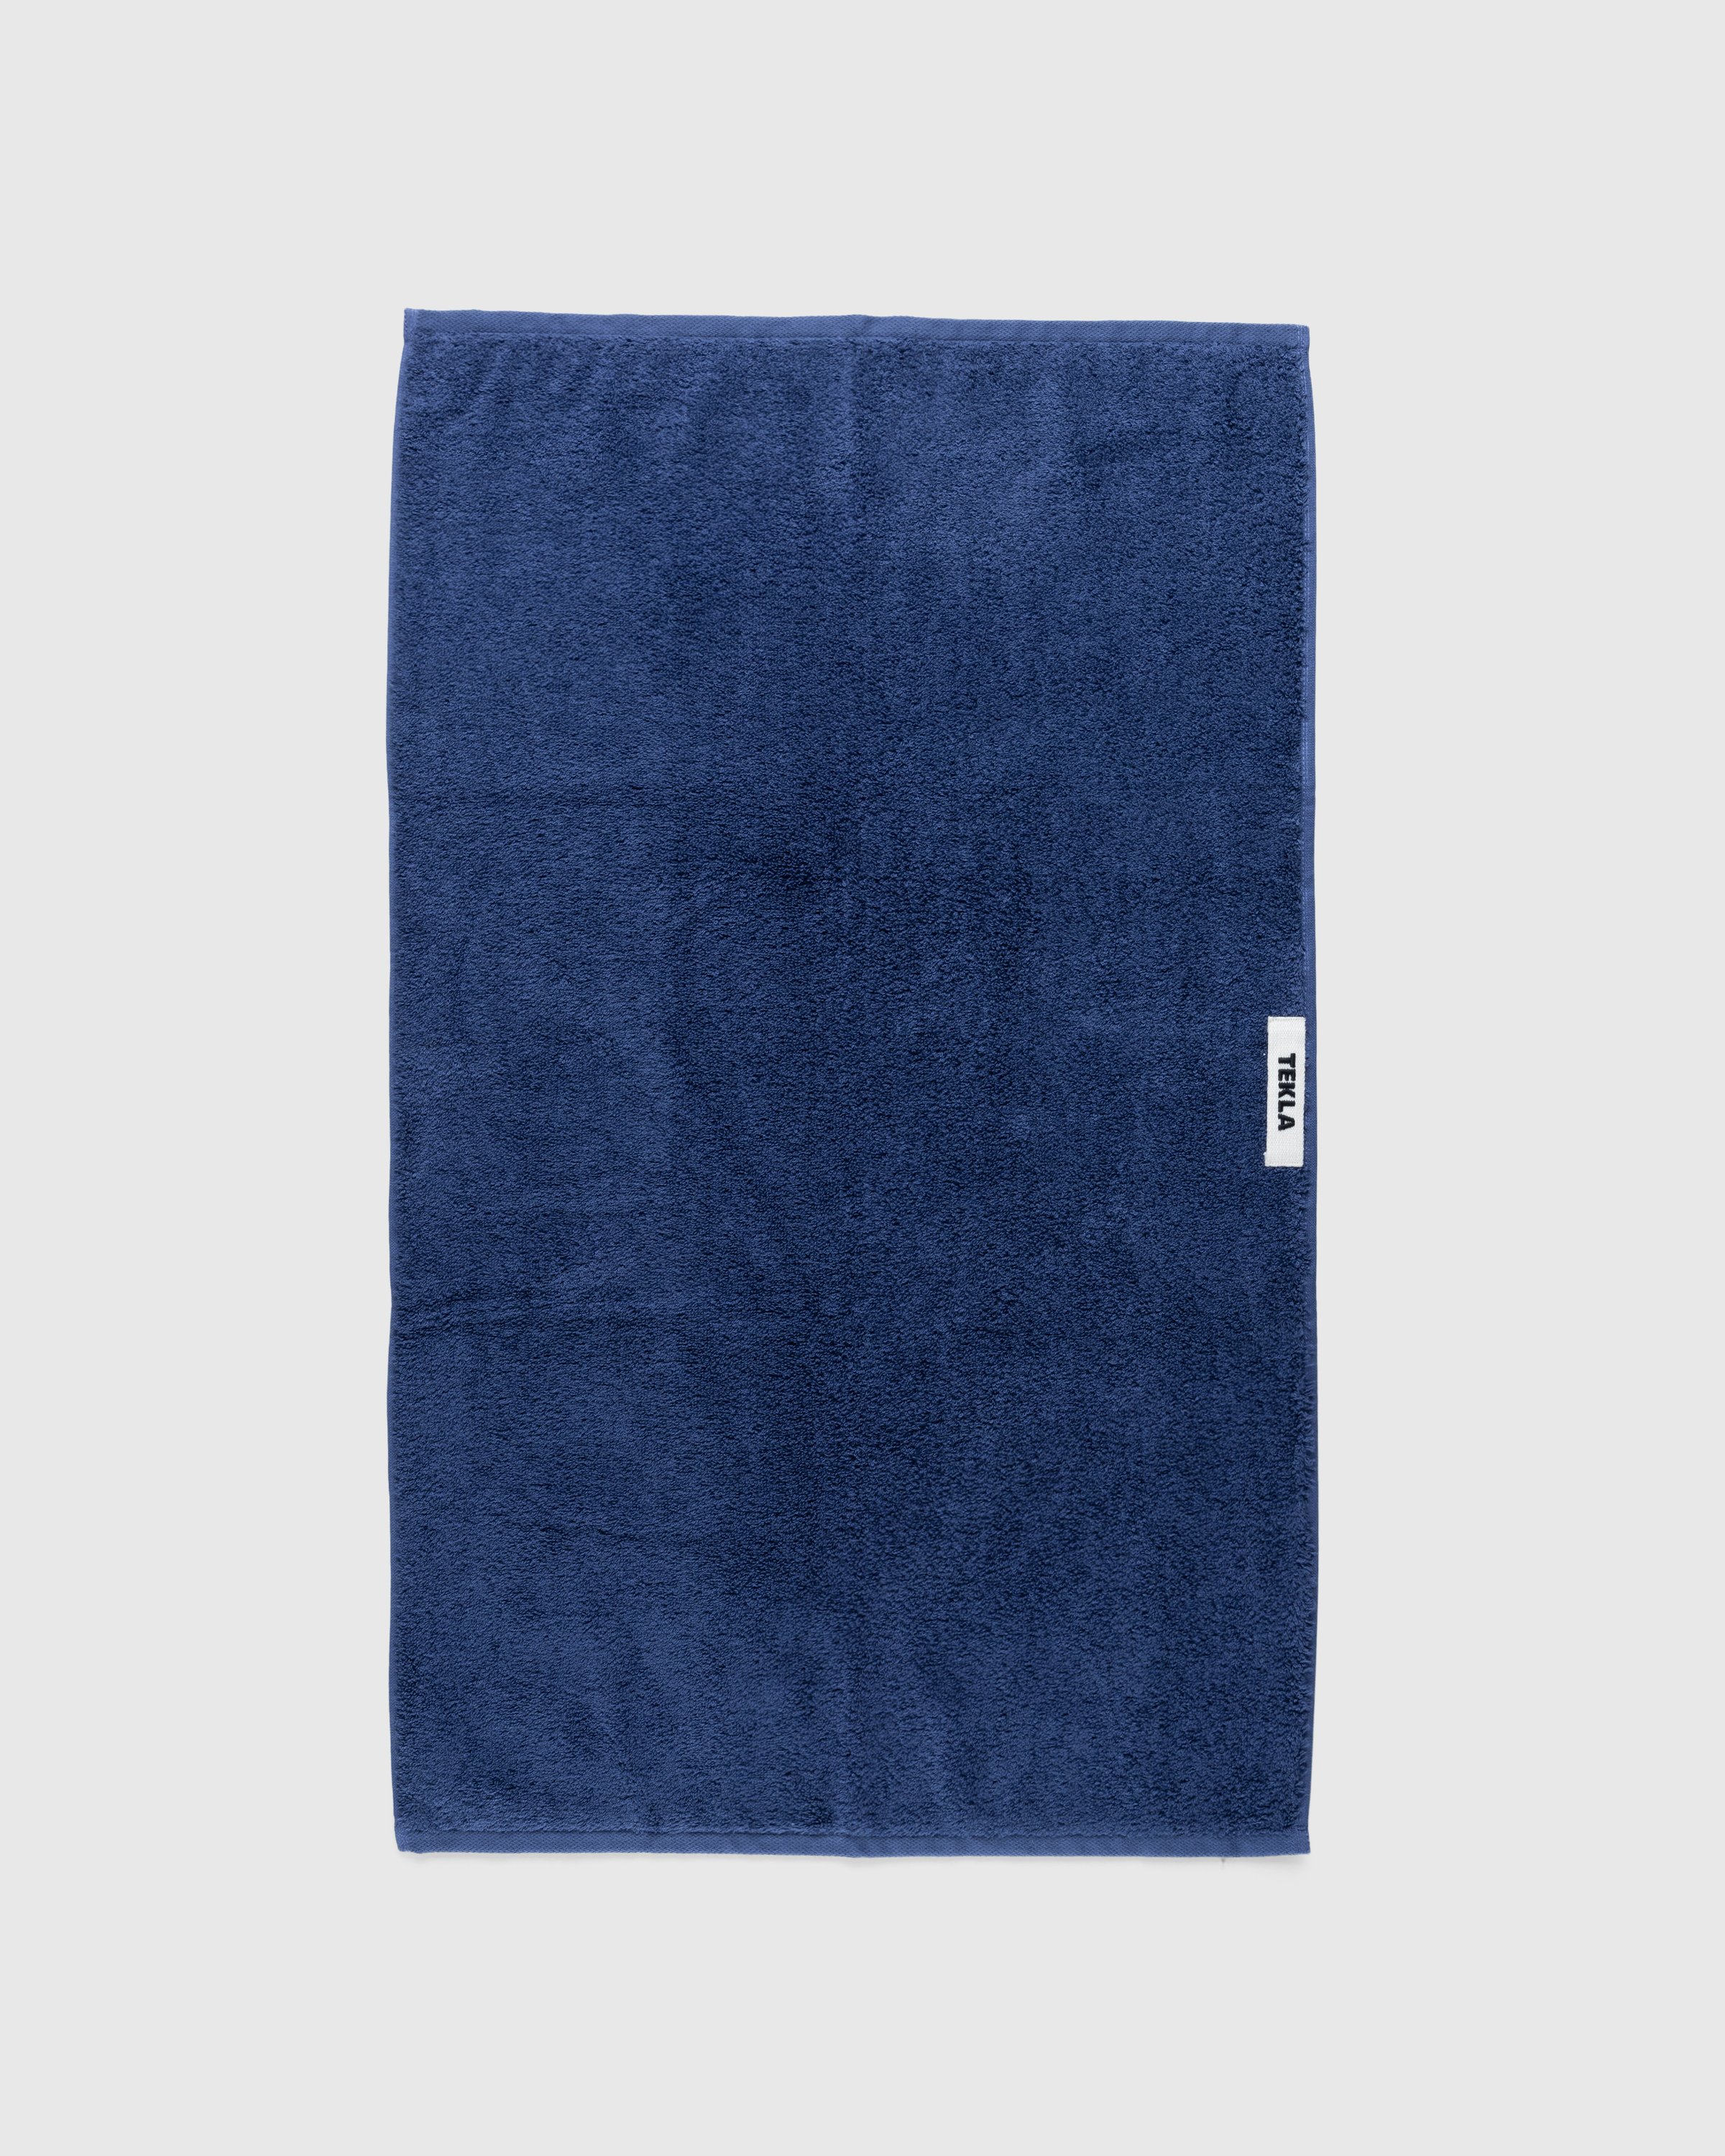 Tekla - Hand Towel 50x80 Navy - Lifestyle - Blue - Image 2